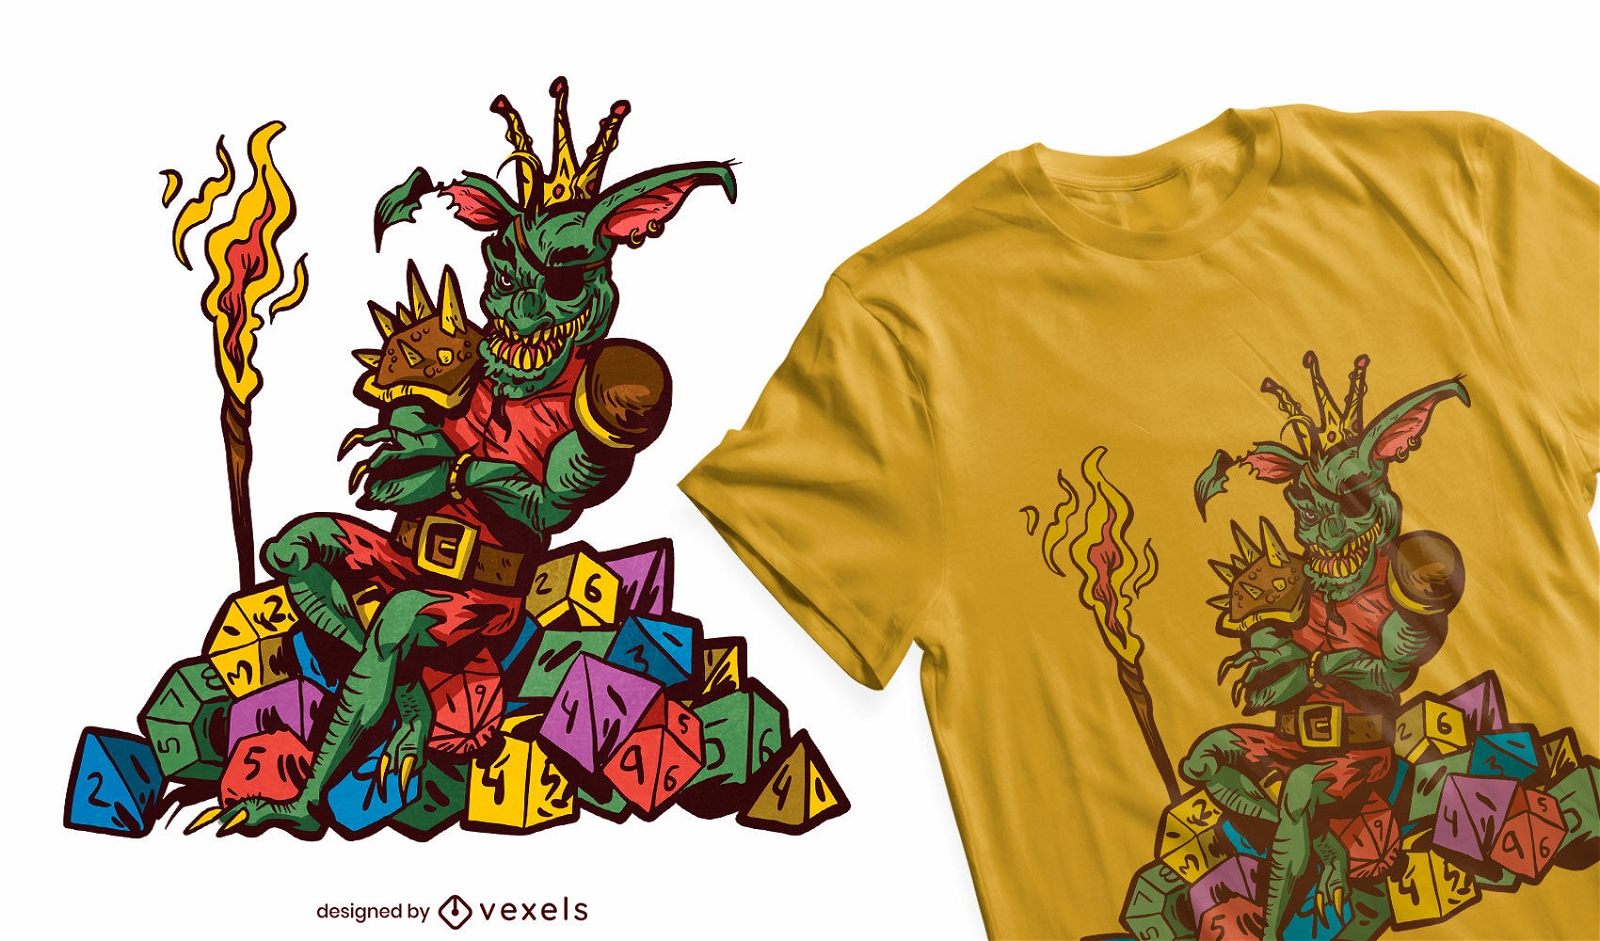 Goblin on dices t-shirt design